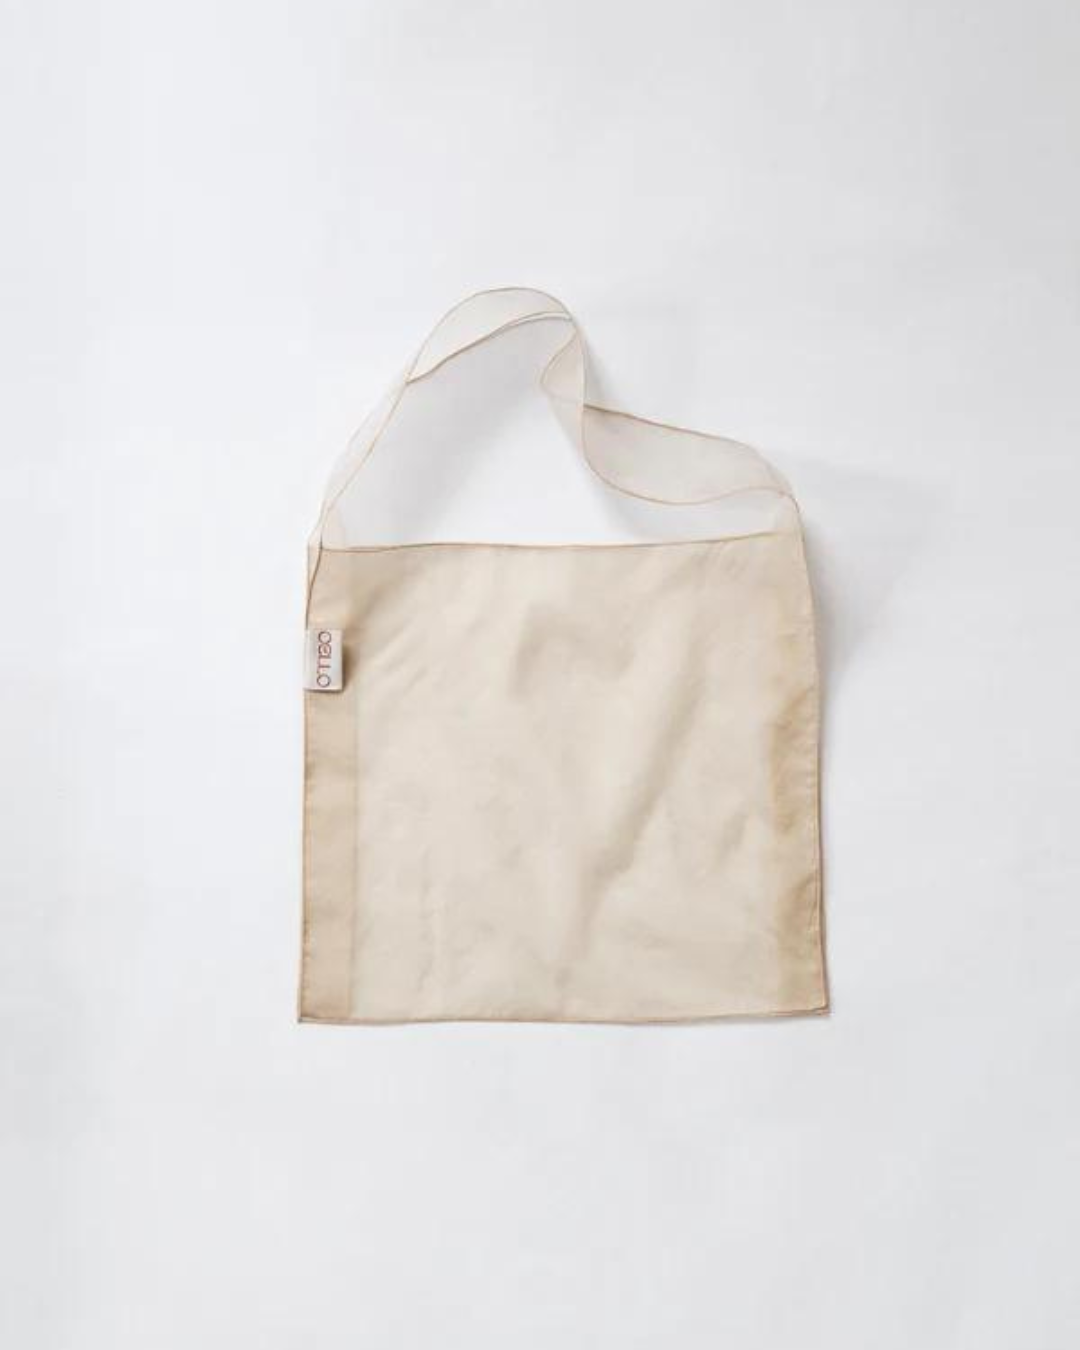 Translucent Silk Bag - Sandstone